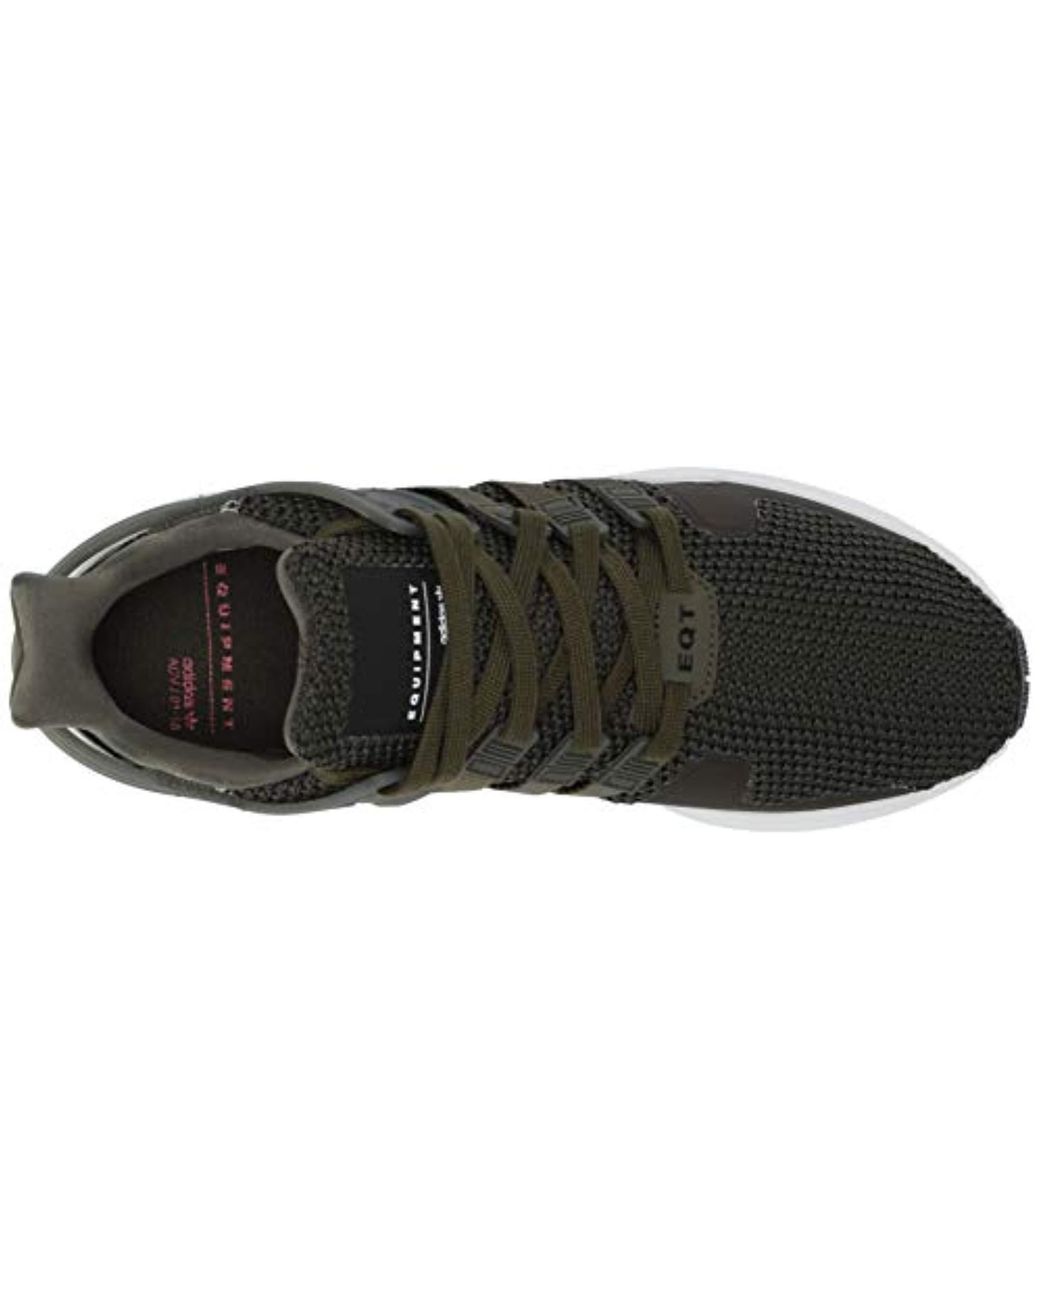 adidas Originals Adidas Eqt Support Adv Fashion Sneaker,night  Cargo/white/black,13.5 M Us for Men | Lyst UK